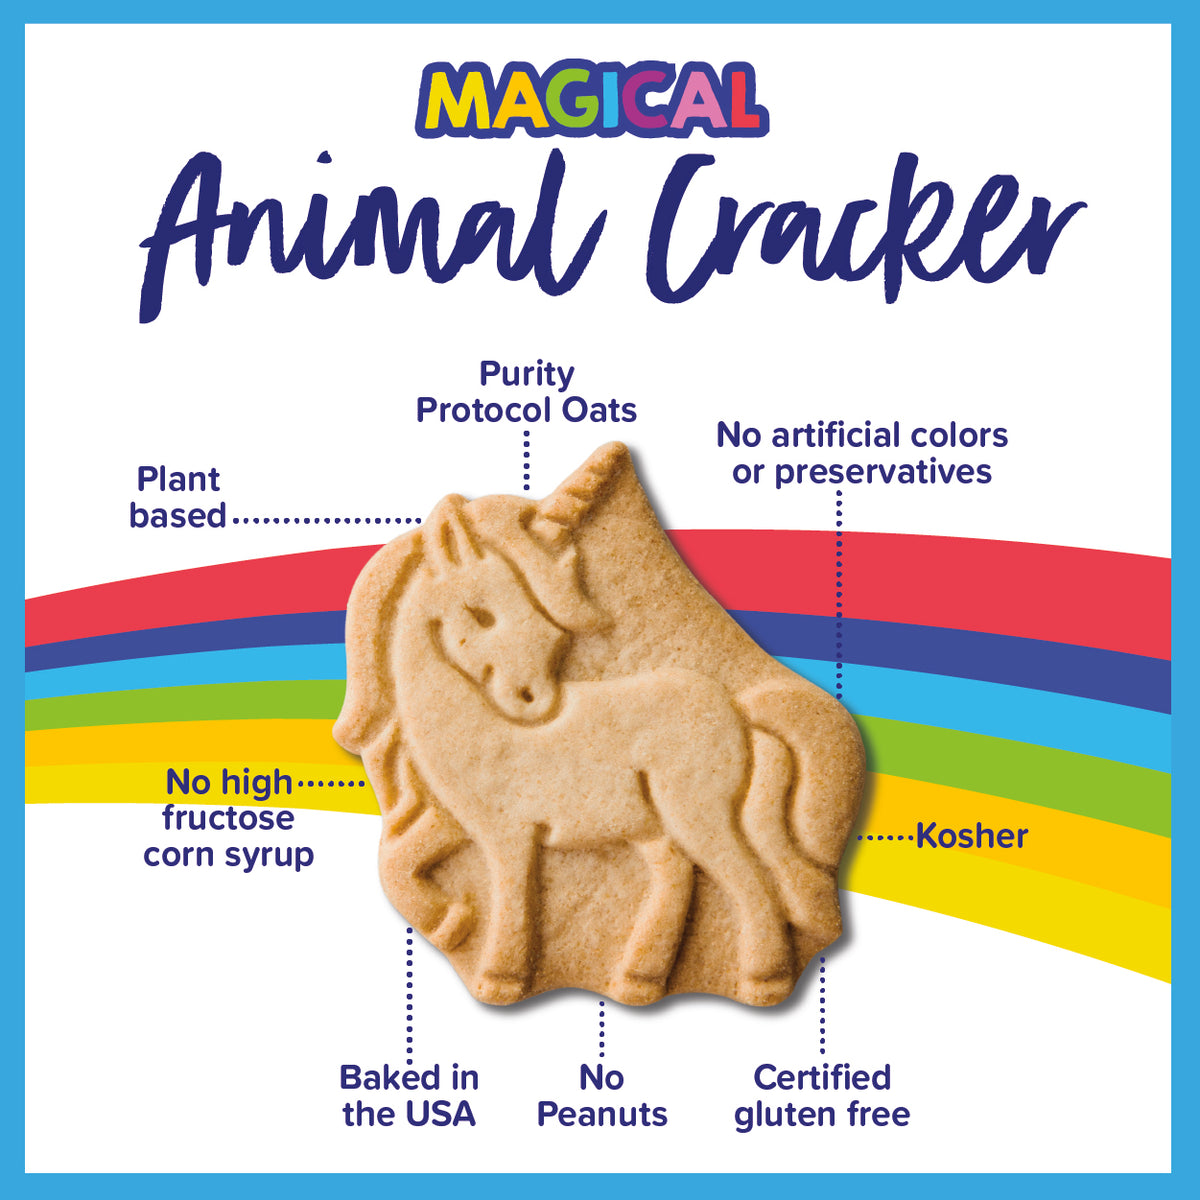 Magical Animal Crackers